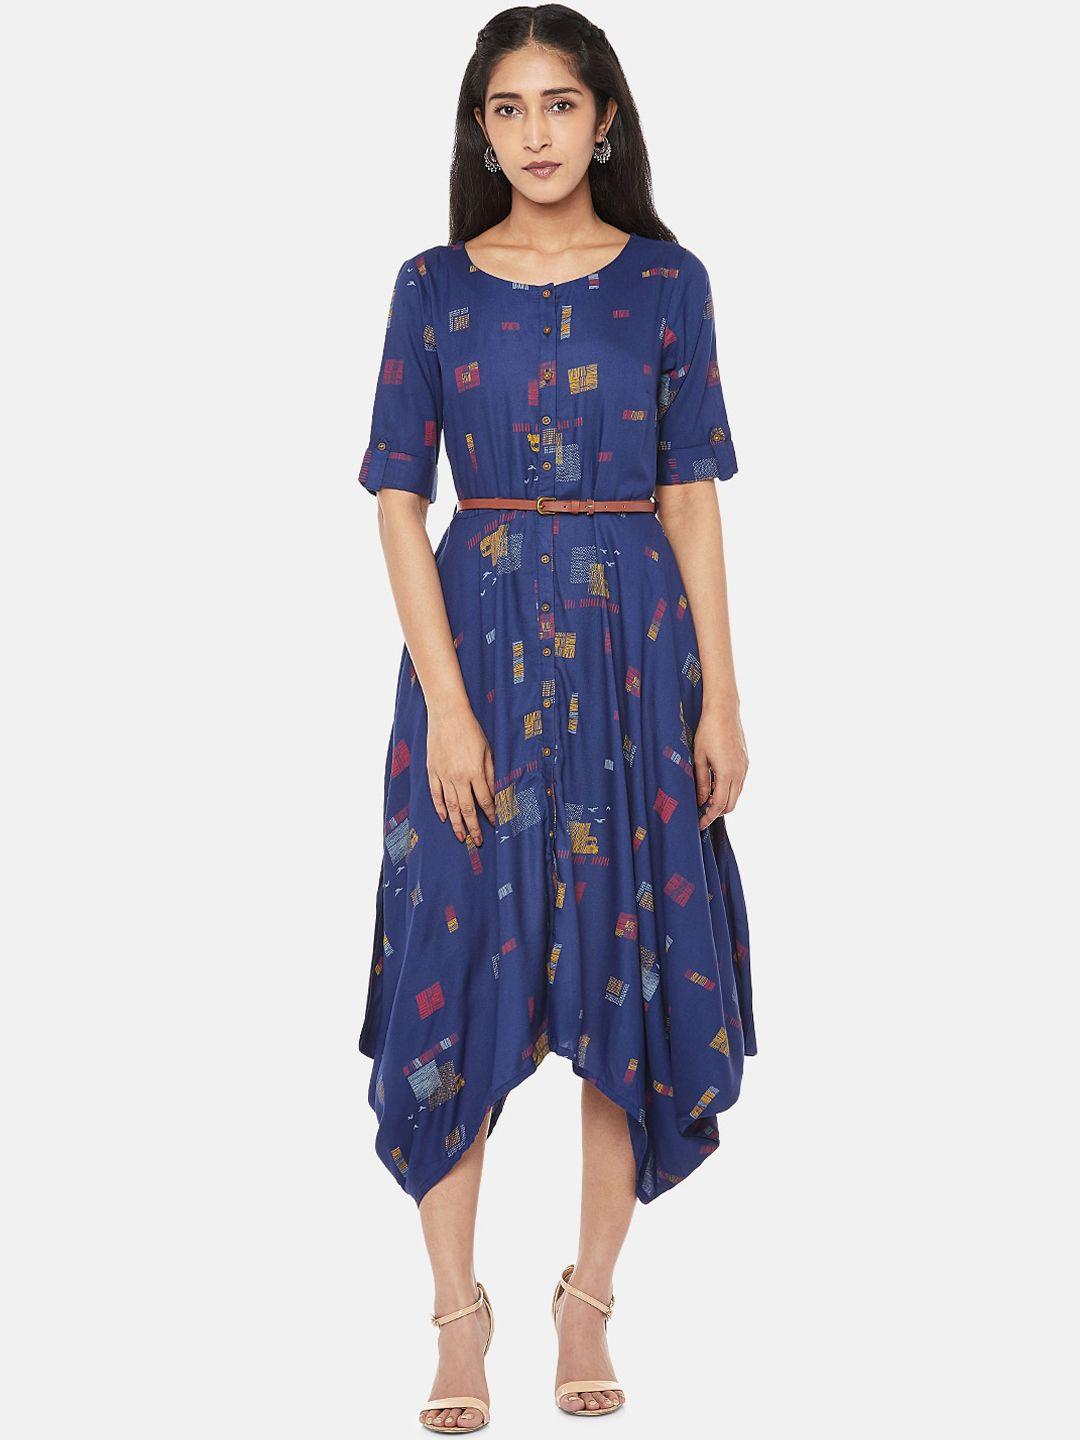 akkriti by pantaloons women navy blue printed a-line dress